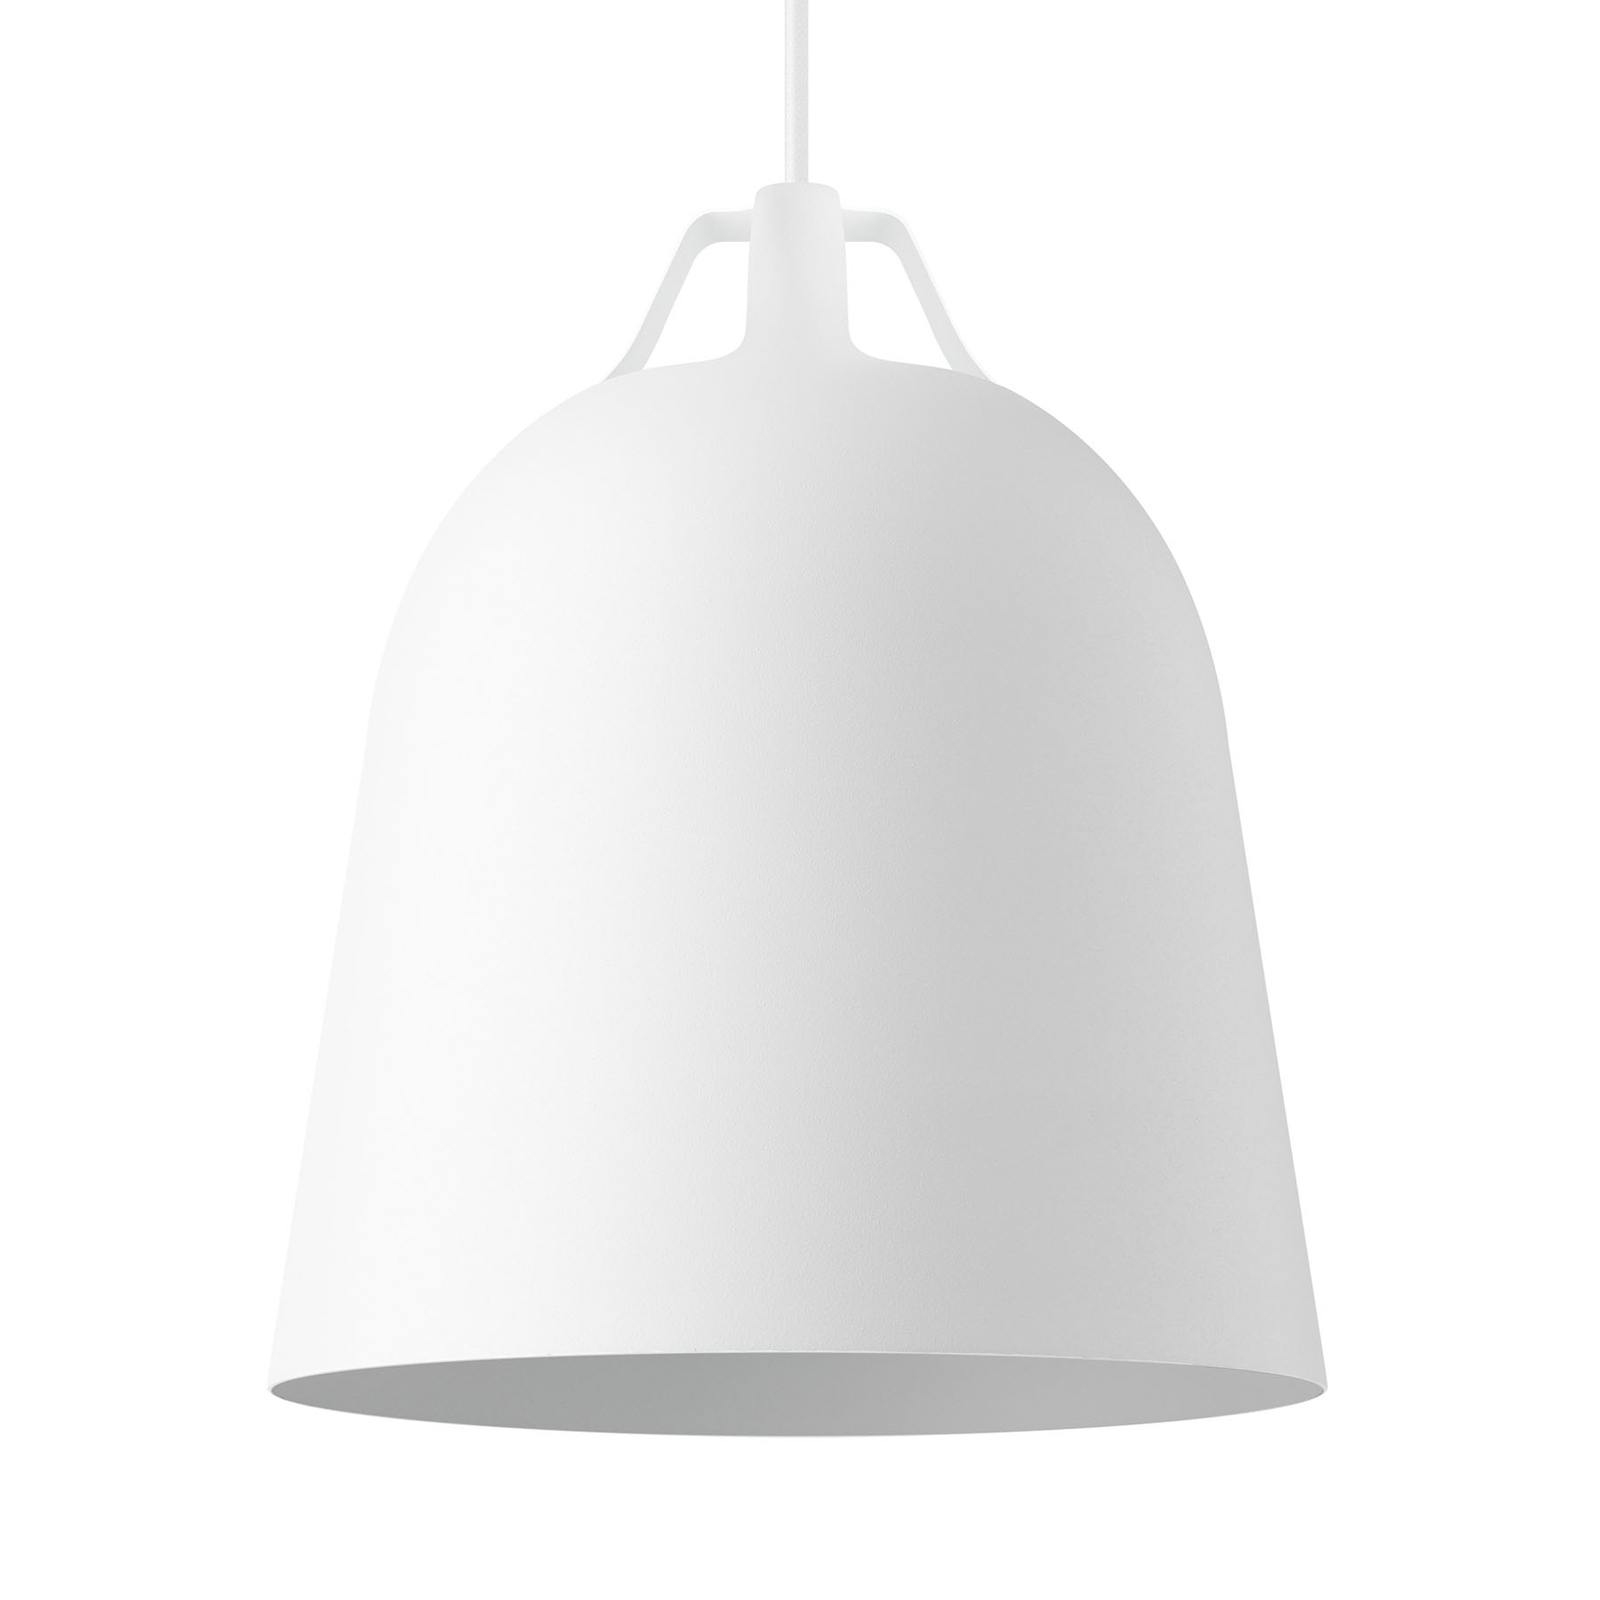 EVA Solo Clover lampada sospensione Ø 21cm, bianco